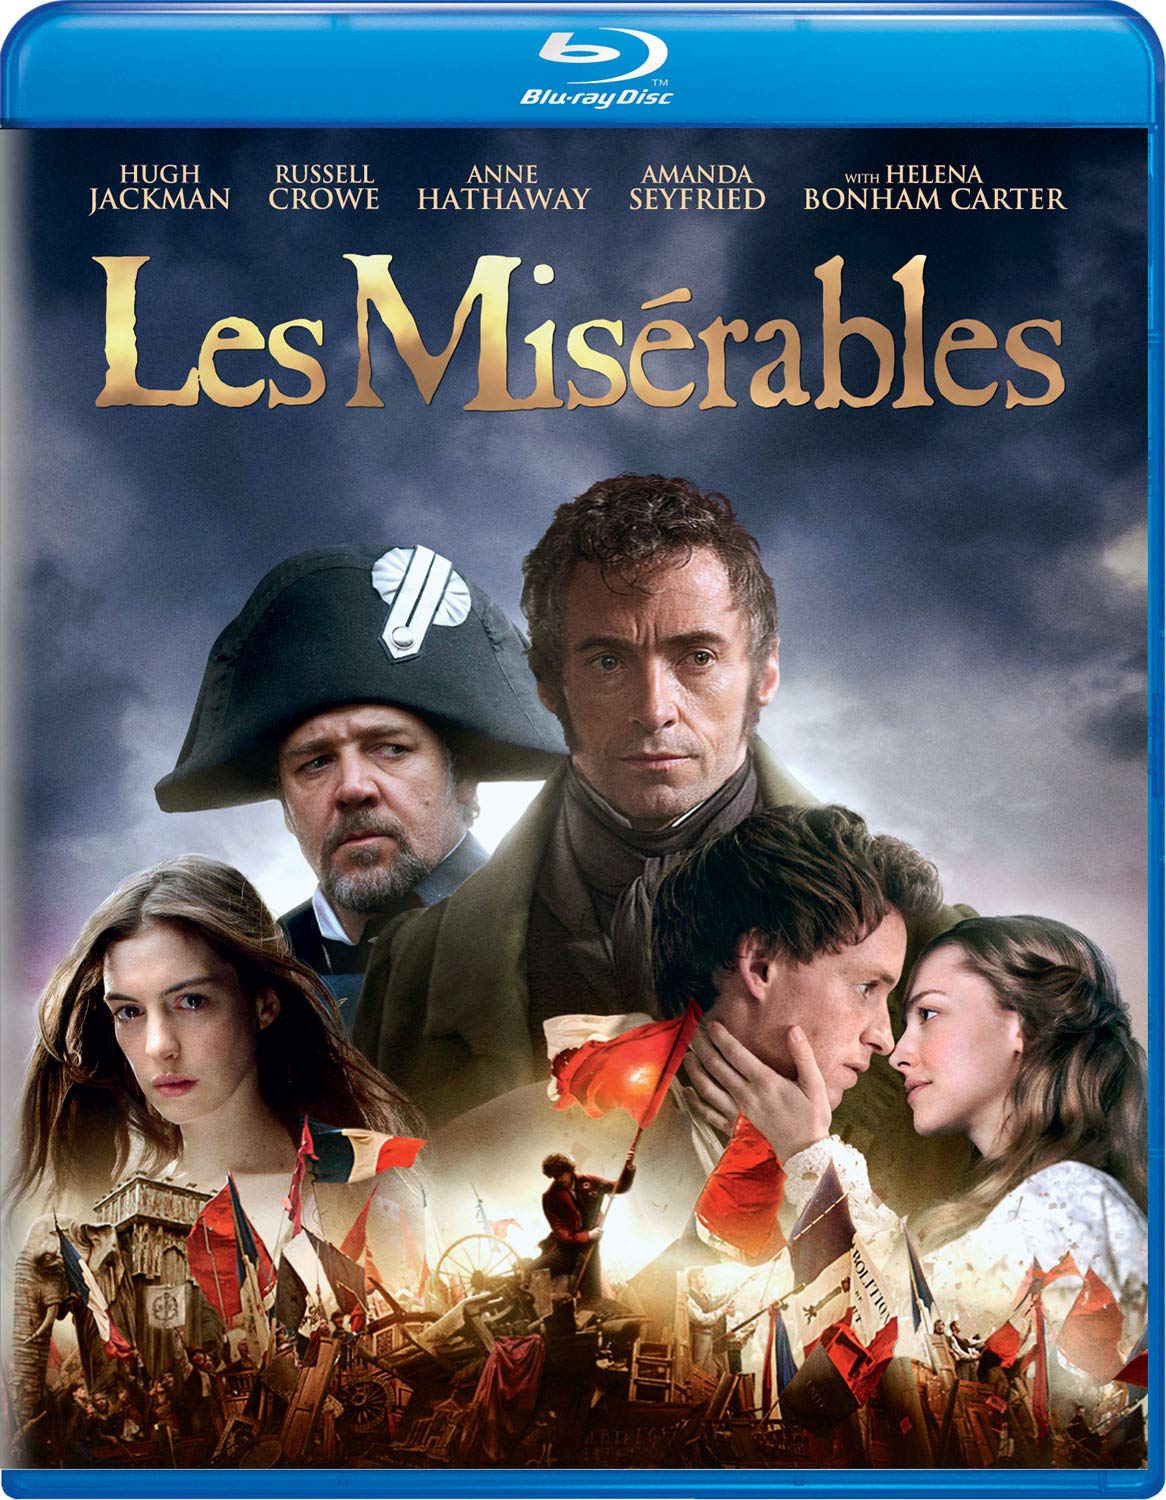 Les Misérables (Blu-ray New Box Art) - Blu-ray [ 2012 ]  - Musical Movies On Blu-ray - Movies On GRUV